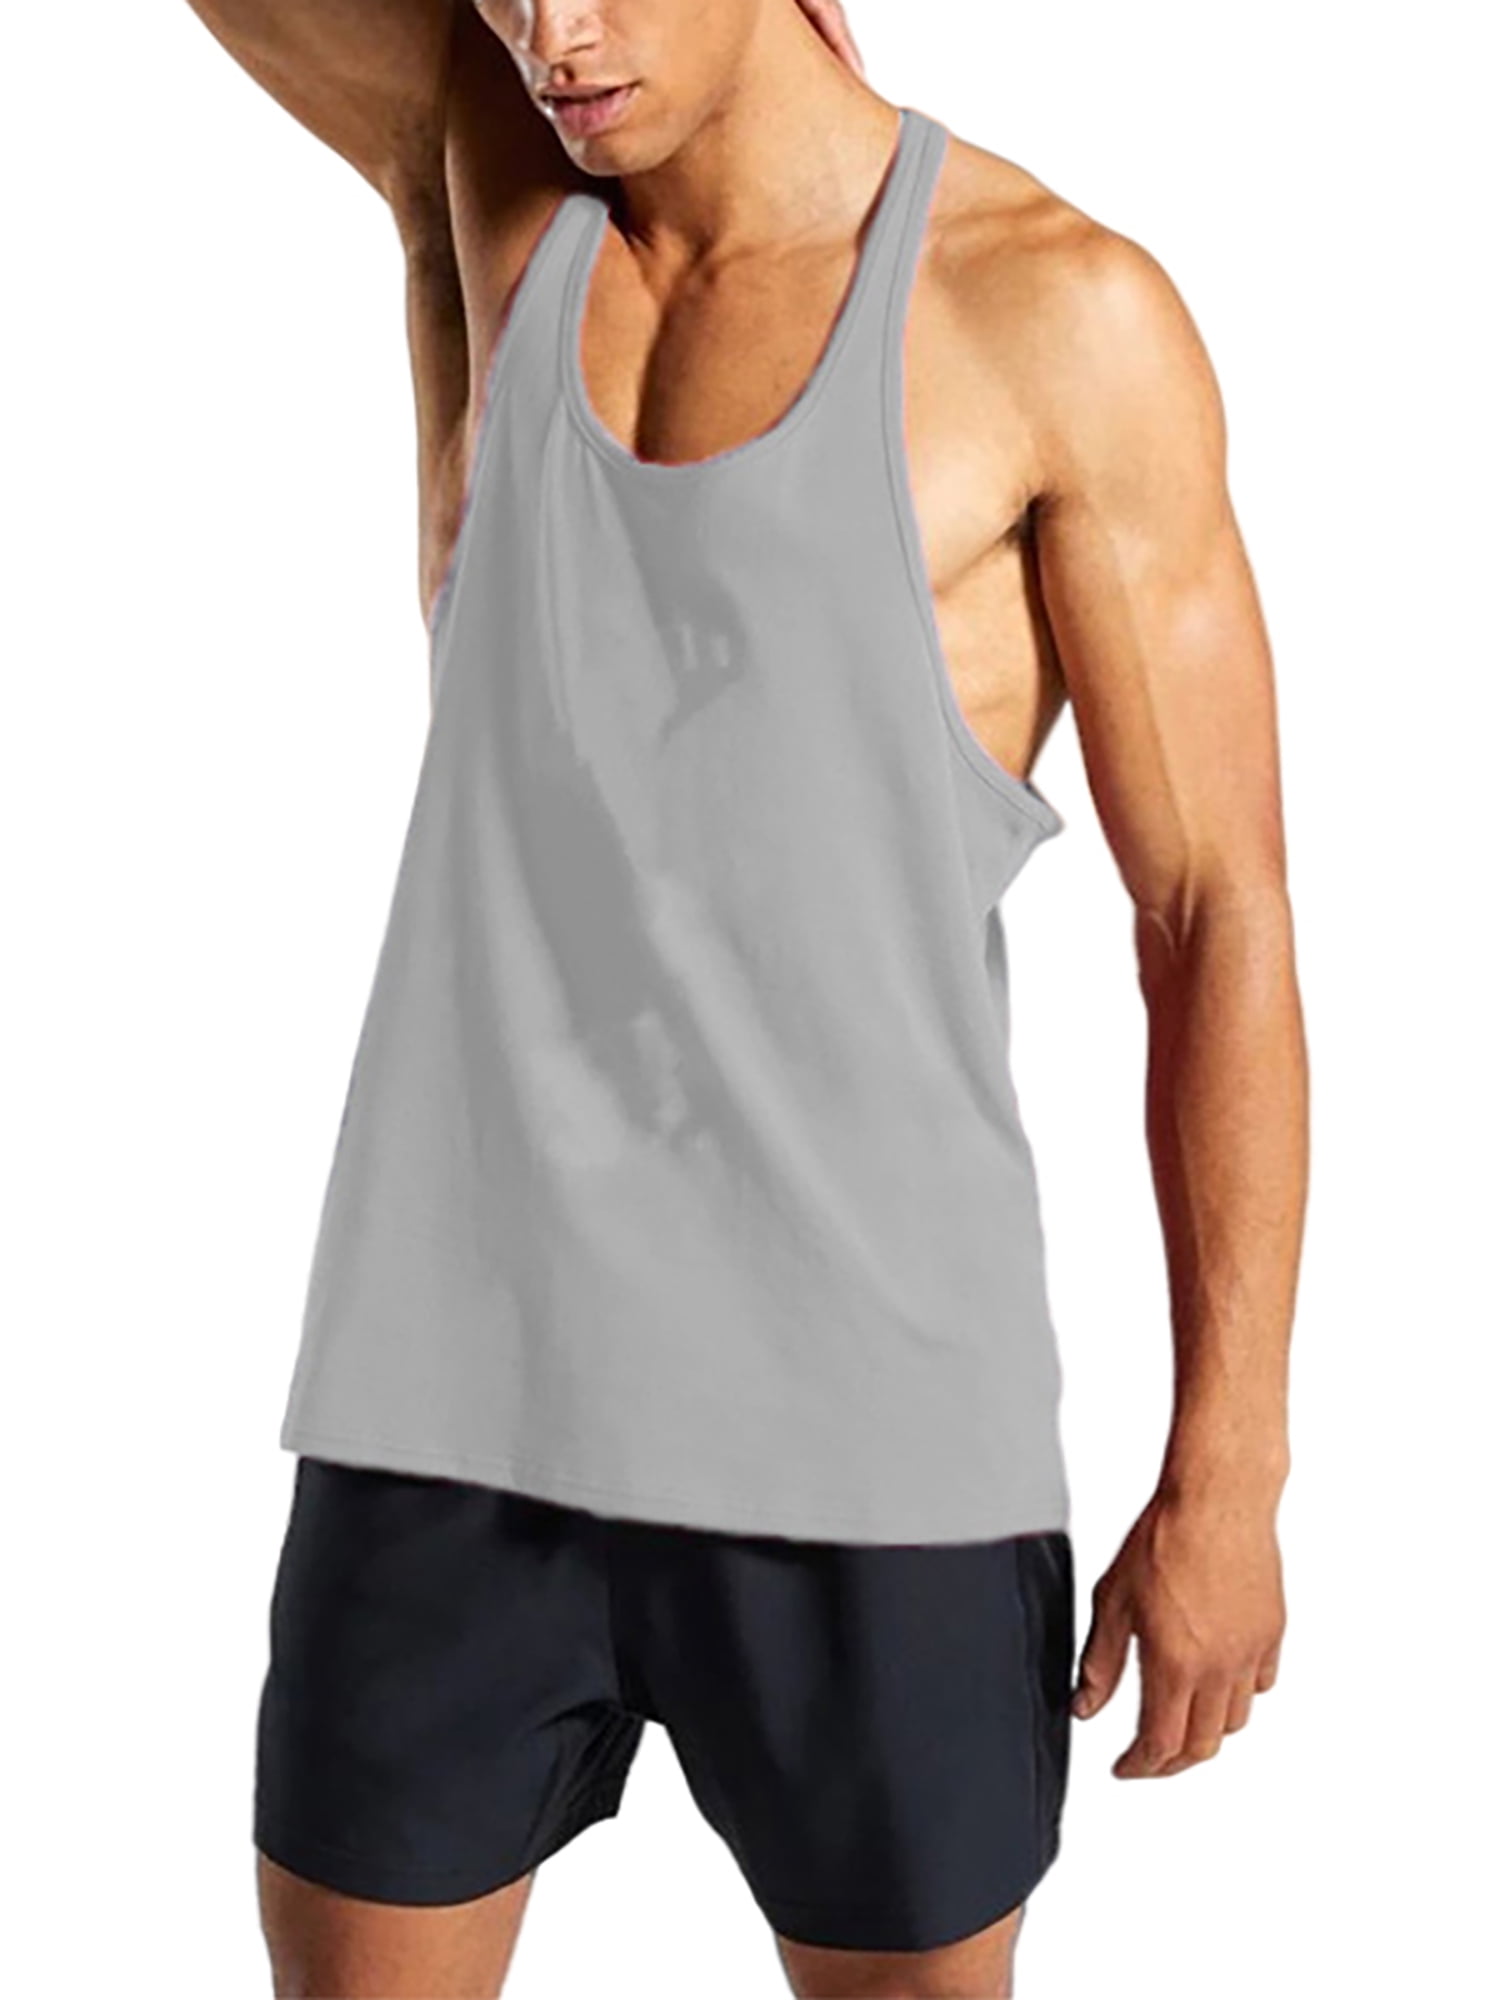 Proact University Muskelshirt Basketball Trikot Tanktop Tank Top Shirt Muscle 